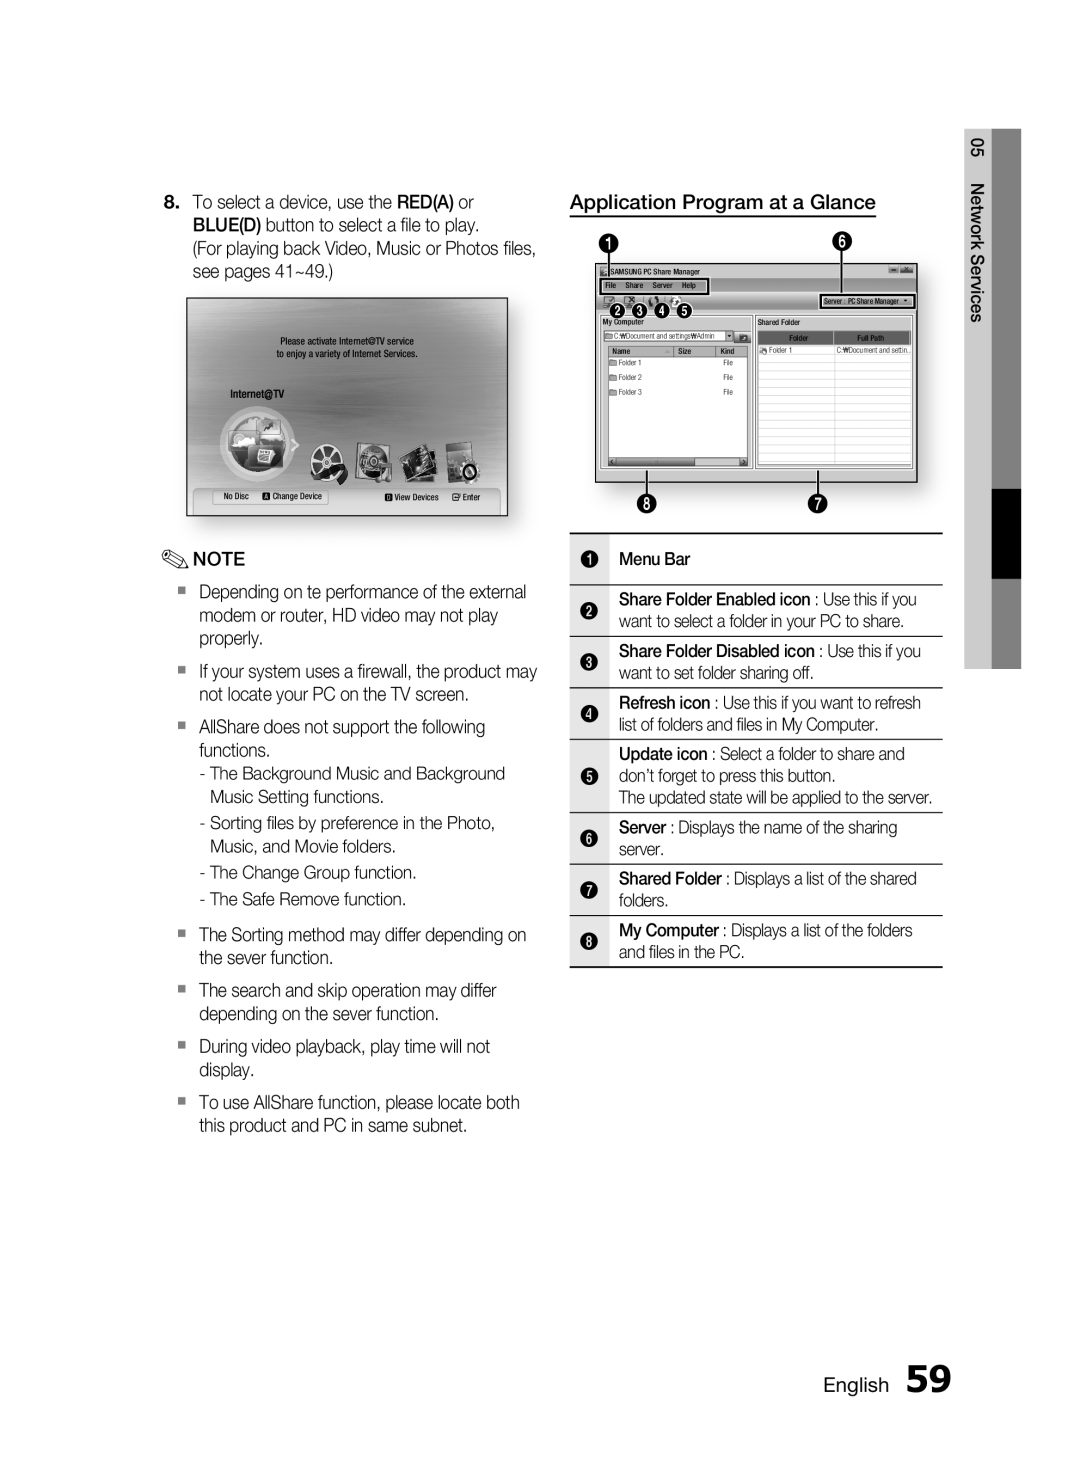 Samsung HT-C5200 user manual Application Program at a Glance, English 